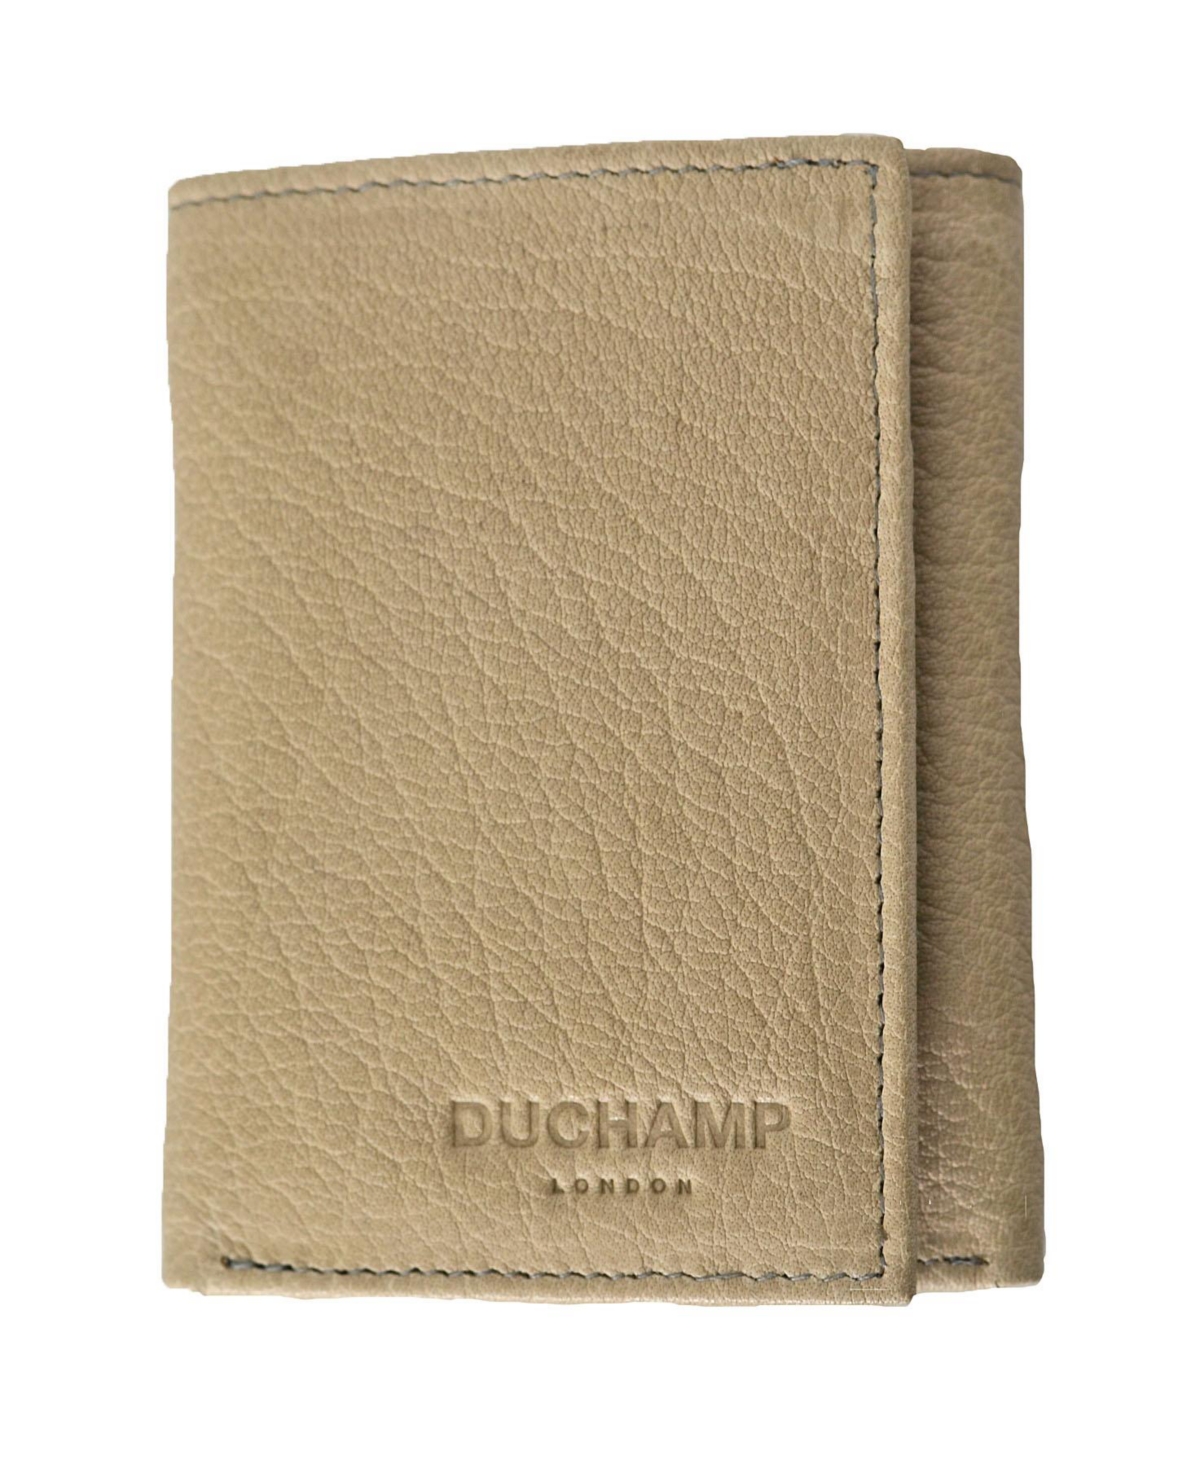 Duchamp London Men's Slim Trifold Wallet